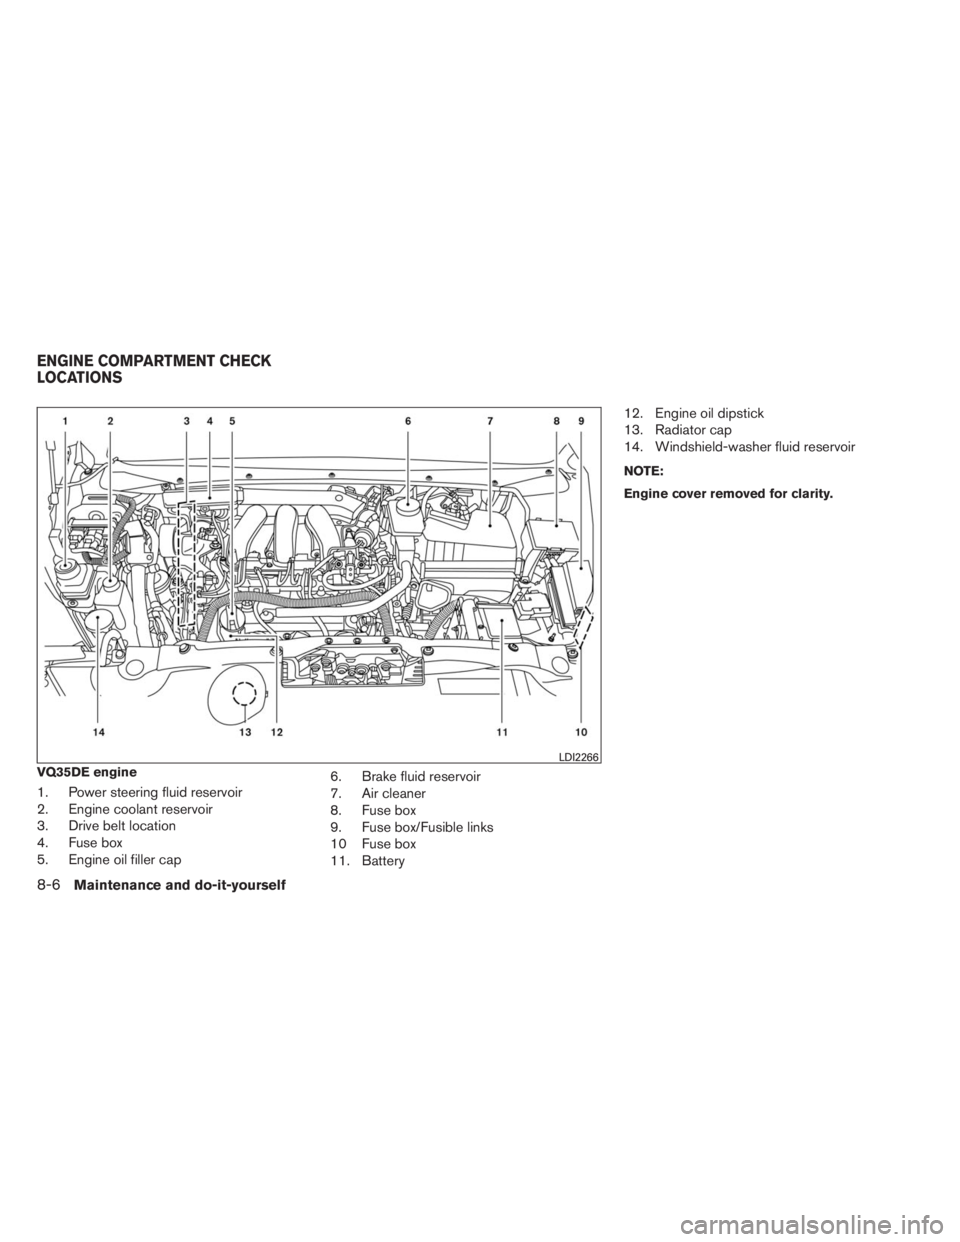 INFINITI QX60 HYBRID 2014  Owners Manual VQ35DE engine
1. Power steering fluid reservoir
2. Engine coolant reservoir
3. Drive belt location
4. Fuse box
5. Engine oil filler cap6. Brake fluid reservoir
7. Air cleaner
8. Fuse box
9. Fuse box/F